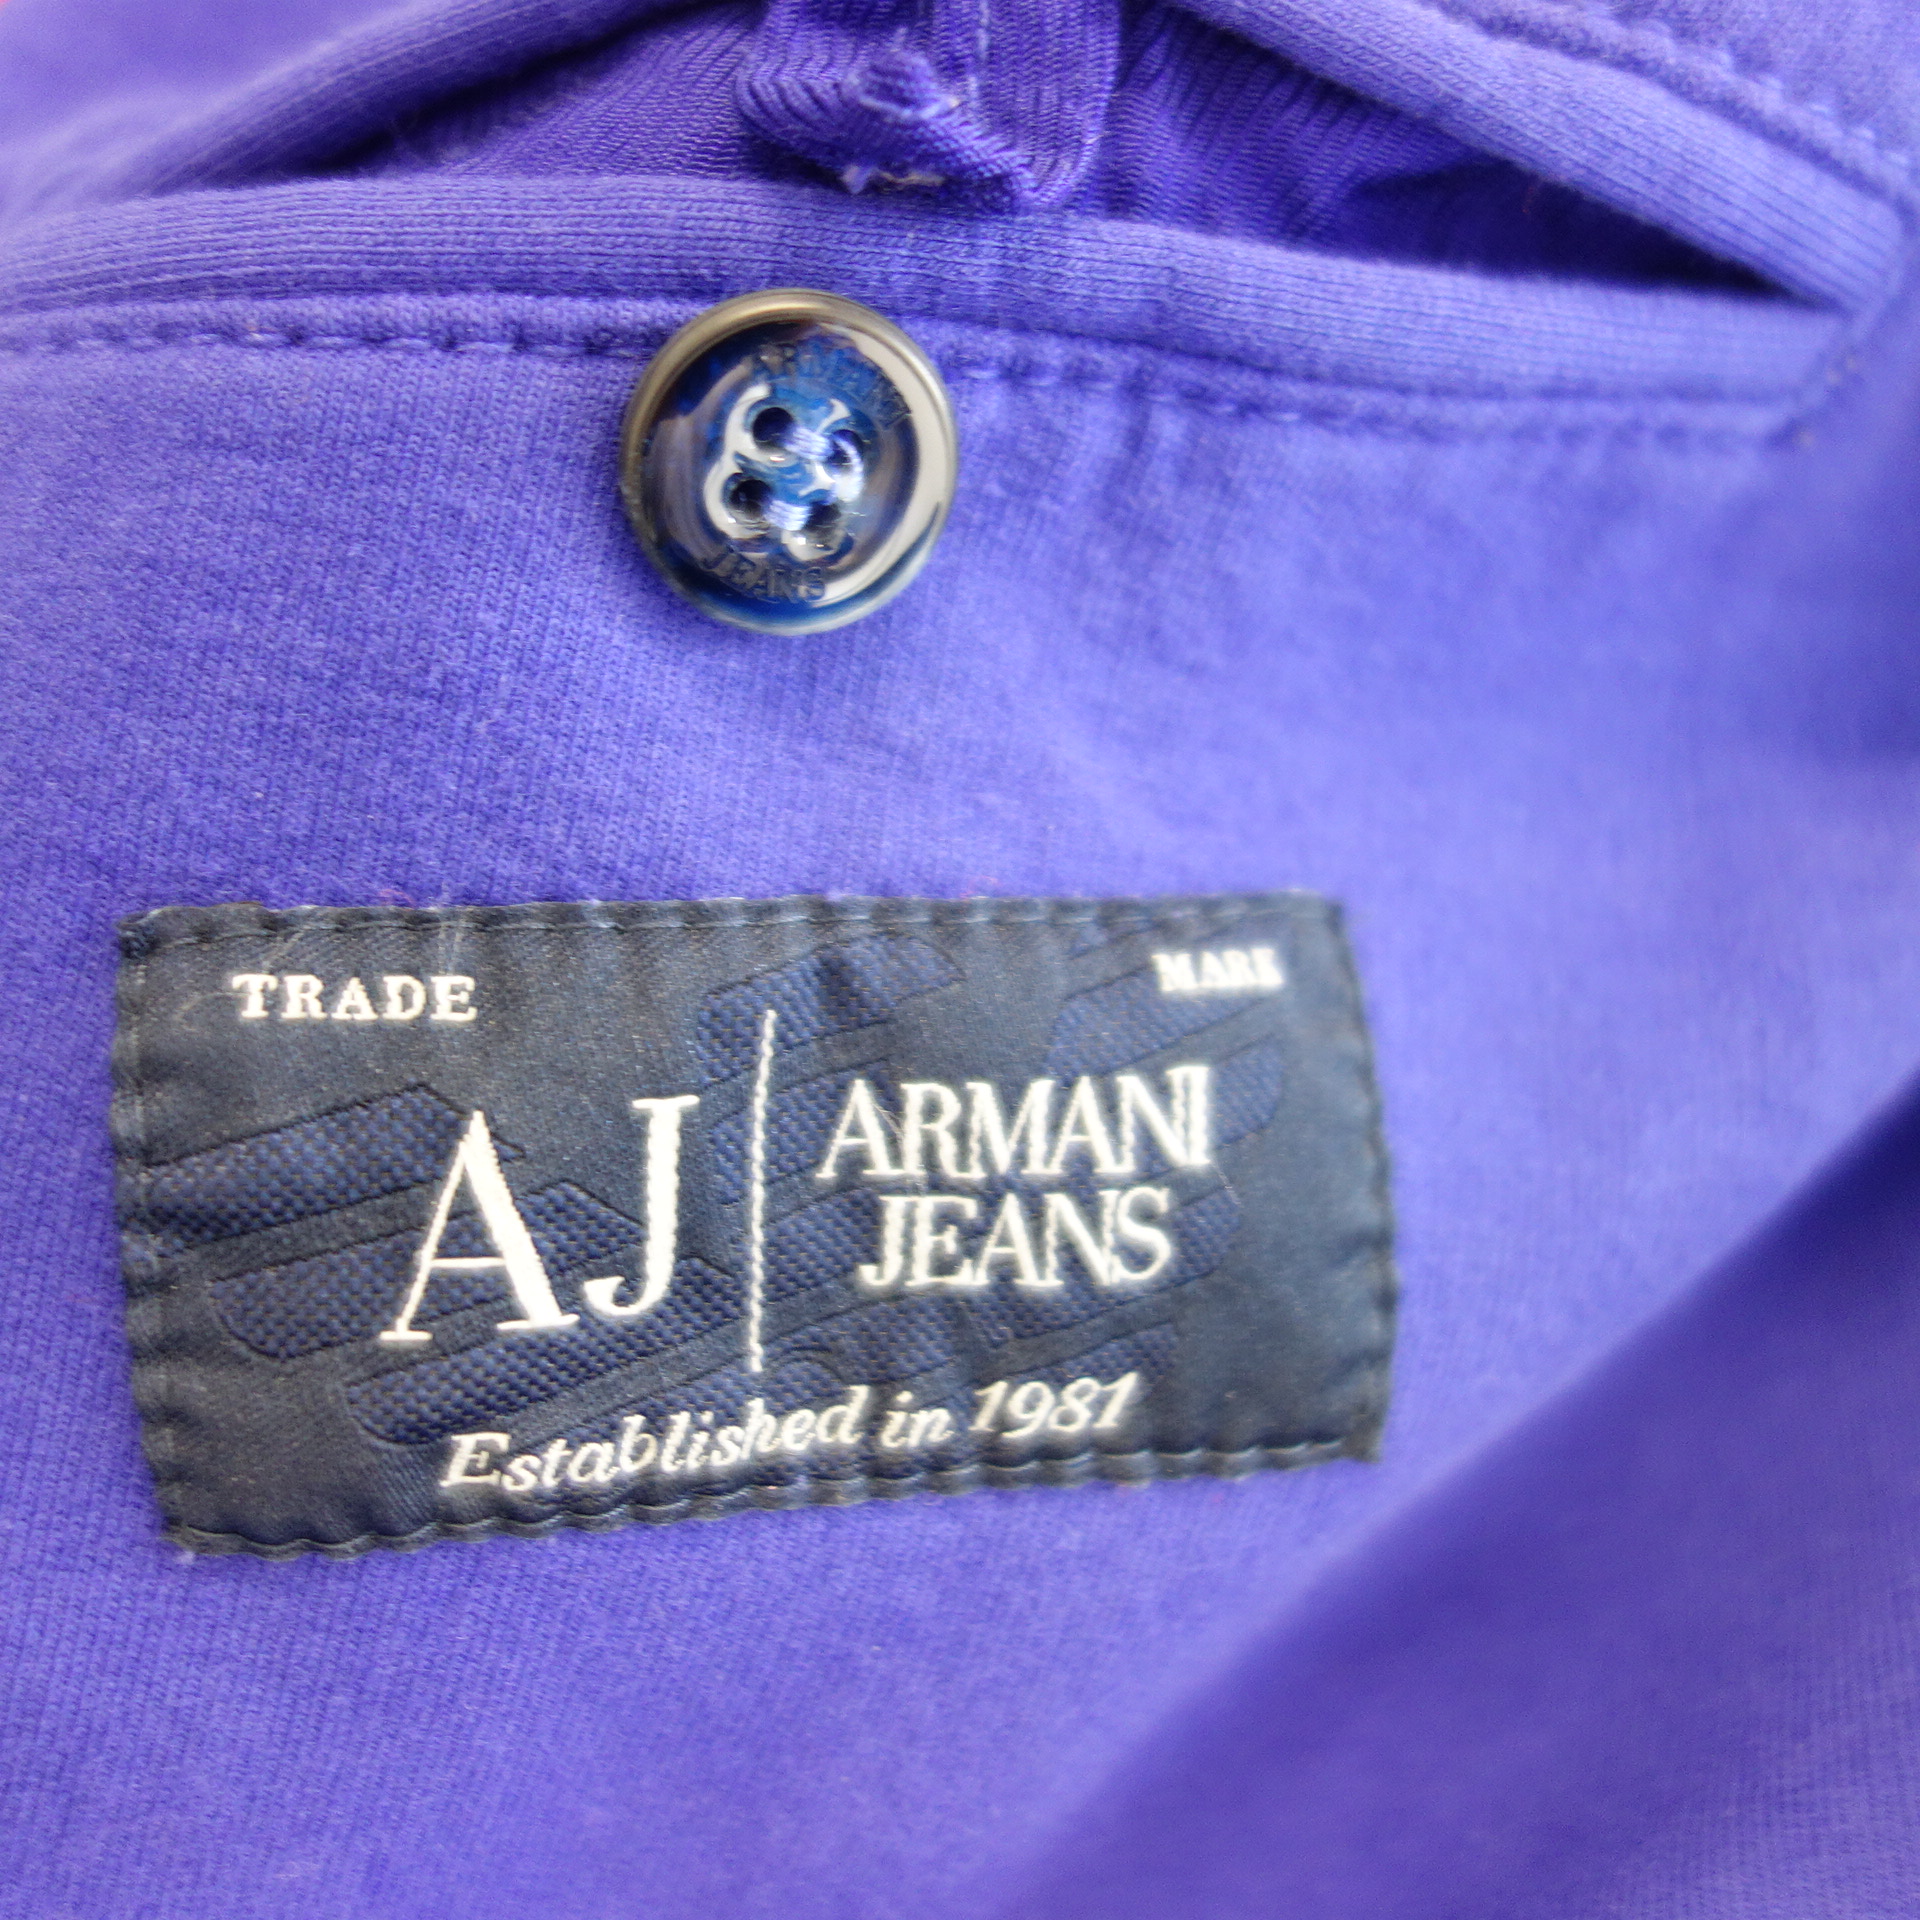 ARMANI Jeans Herren Sweat Jacke Sakko Style Blau Jersey Slim Baumwolle Elasthan